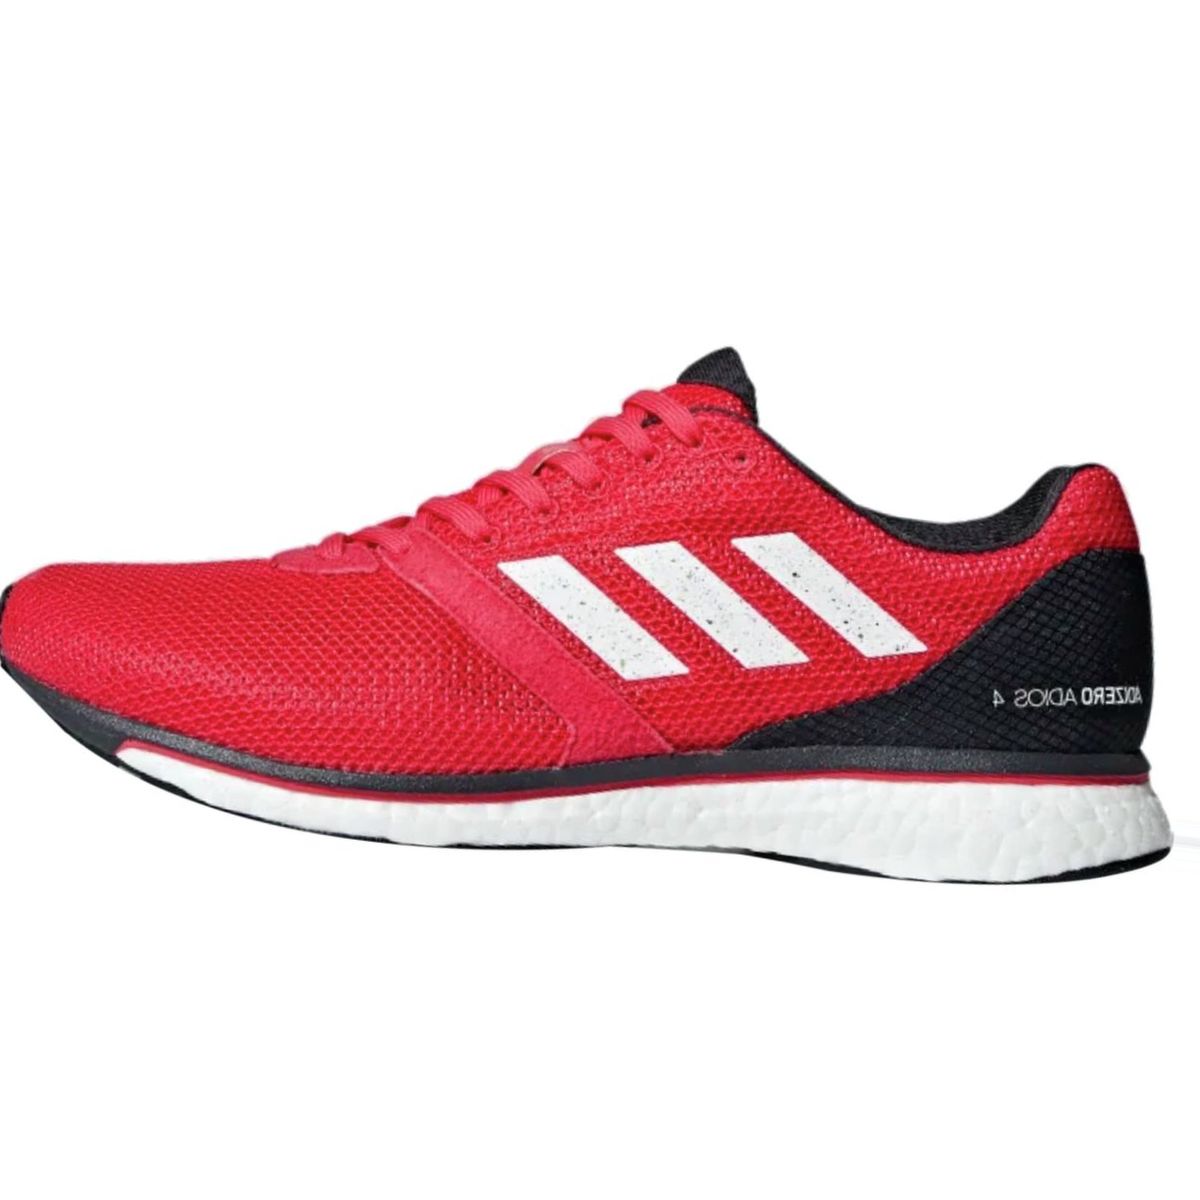 Adidas Adizero Adios 4 Boost Running Shoe - Men's